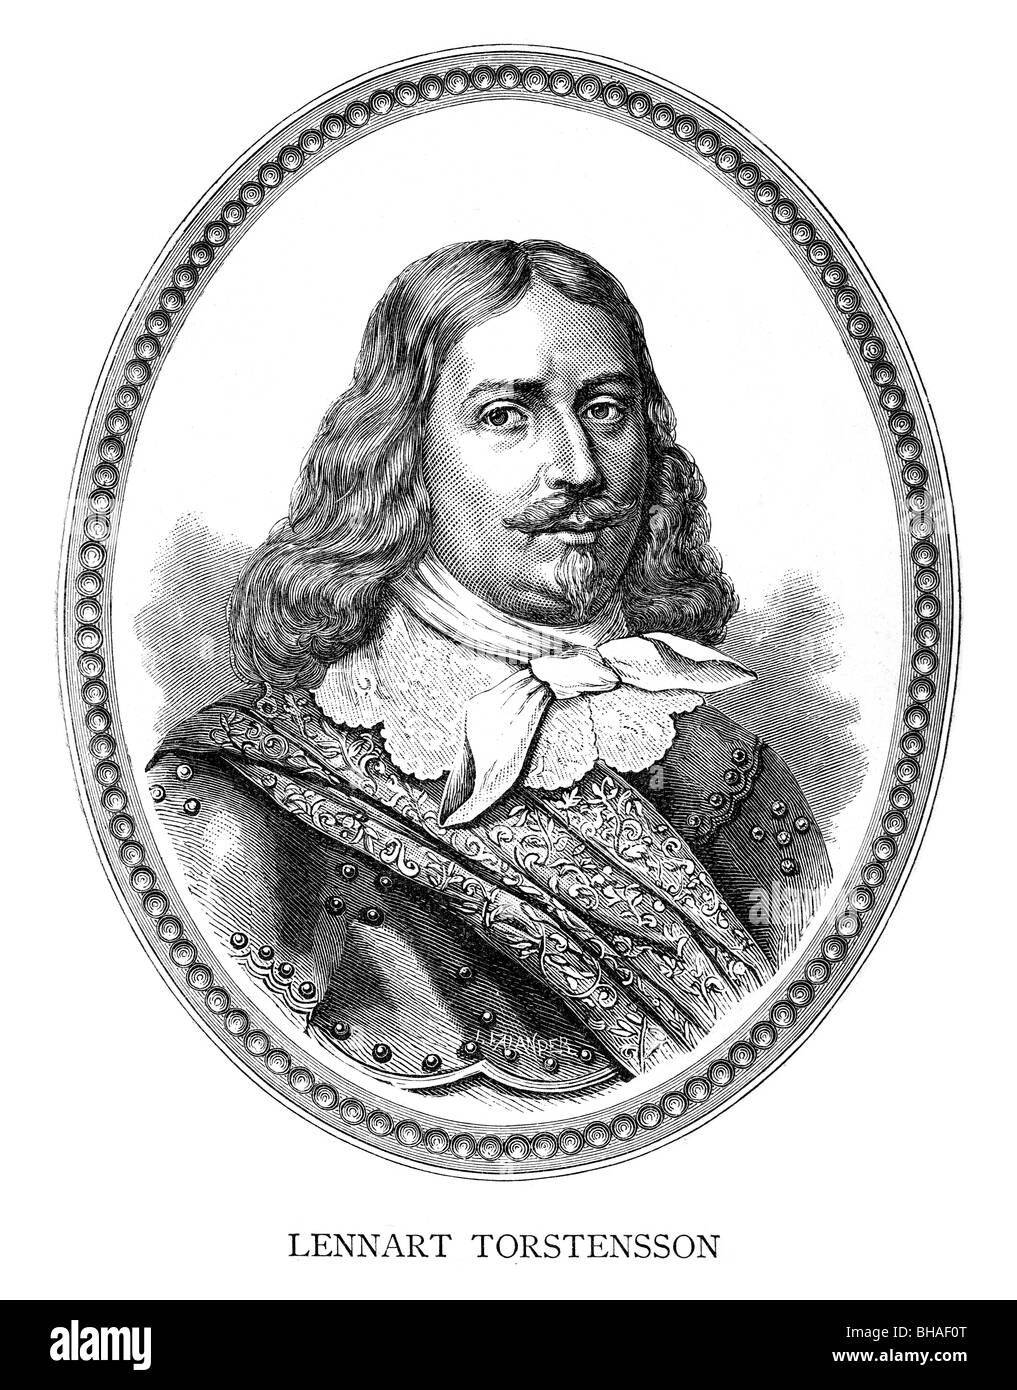 Lennart Torstenson, comte d'Ortala, Baron de Virestad (17 août 1603 - 7 avril 1651) Banque D'Images